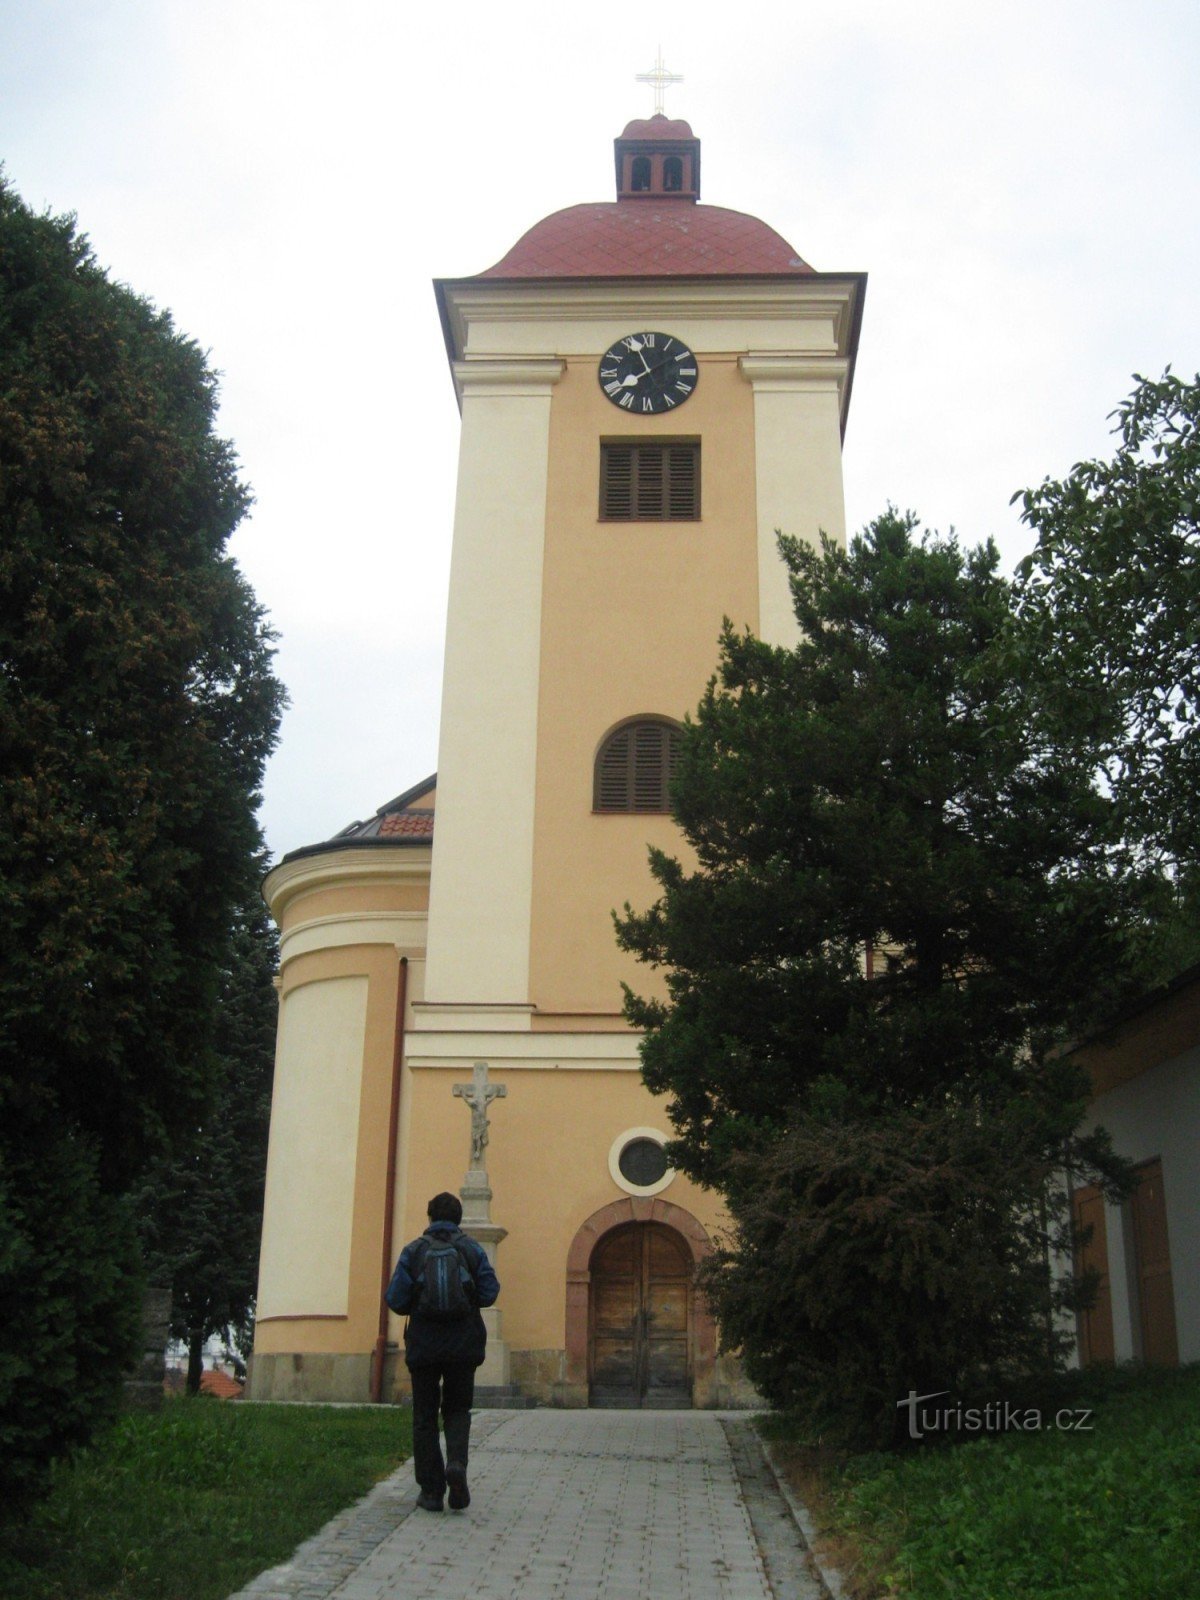 St Nicholas kyrka